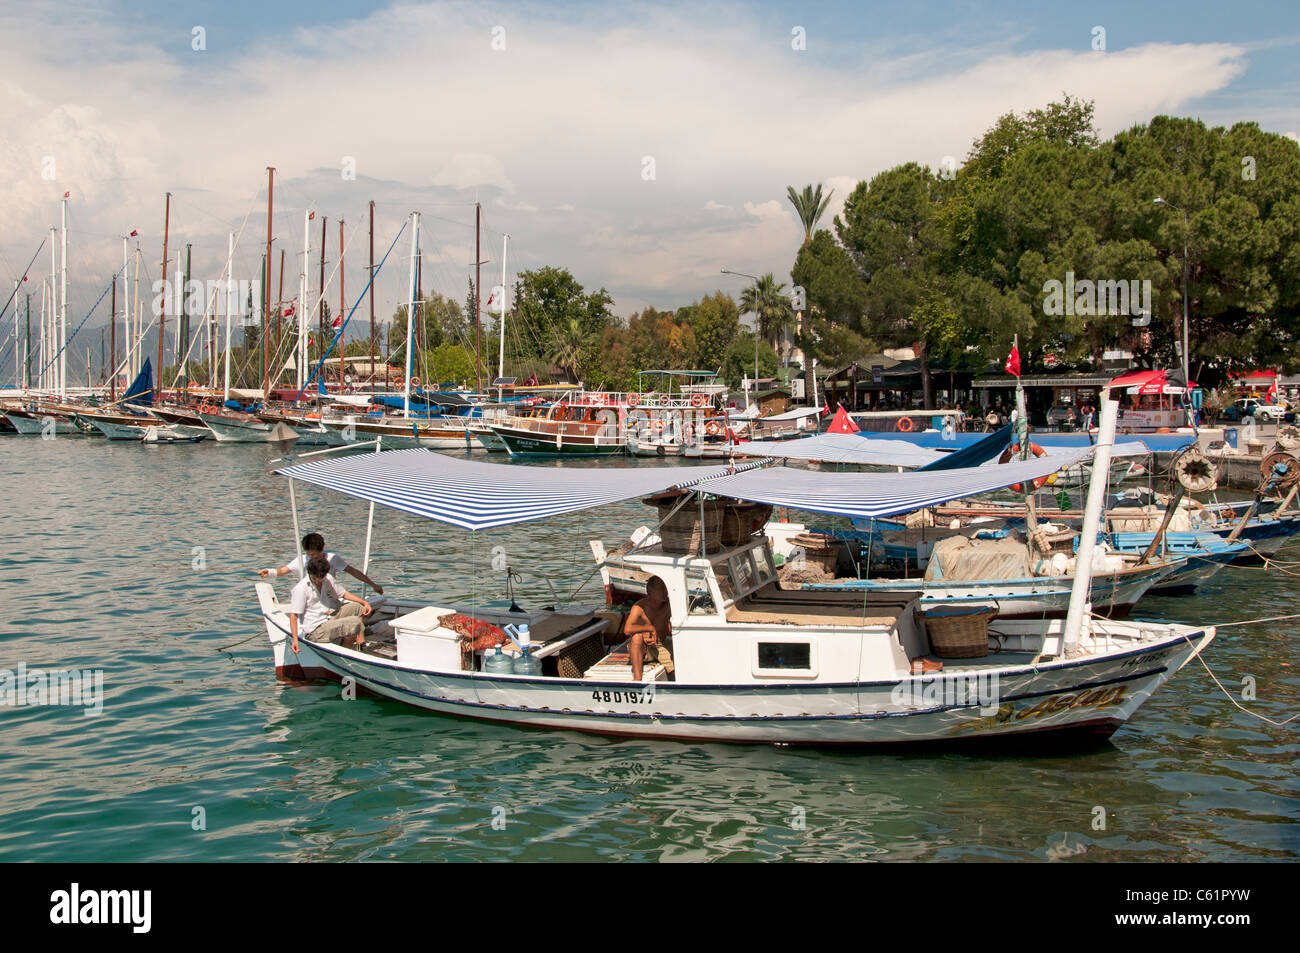 Port Harbour Gocek Marina vicino a Fethiye Turchia Bagno Turco Foto Stock